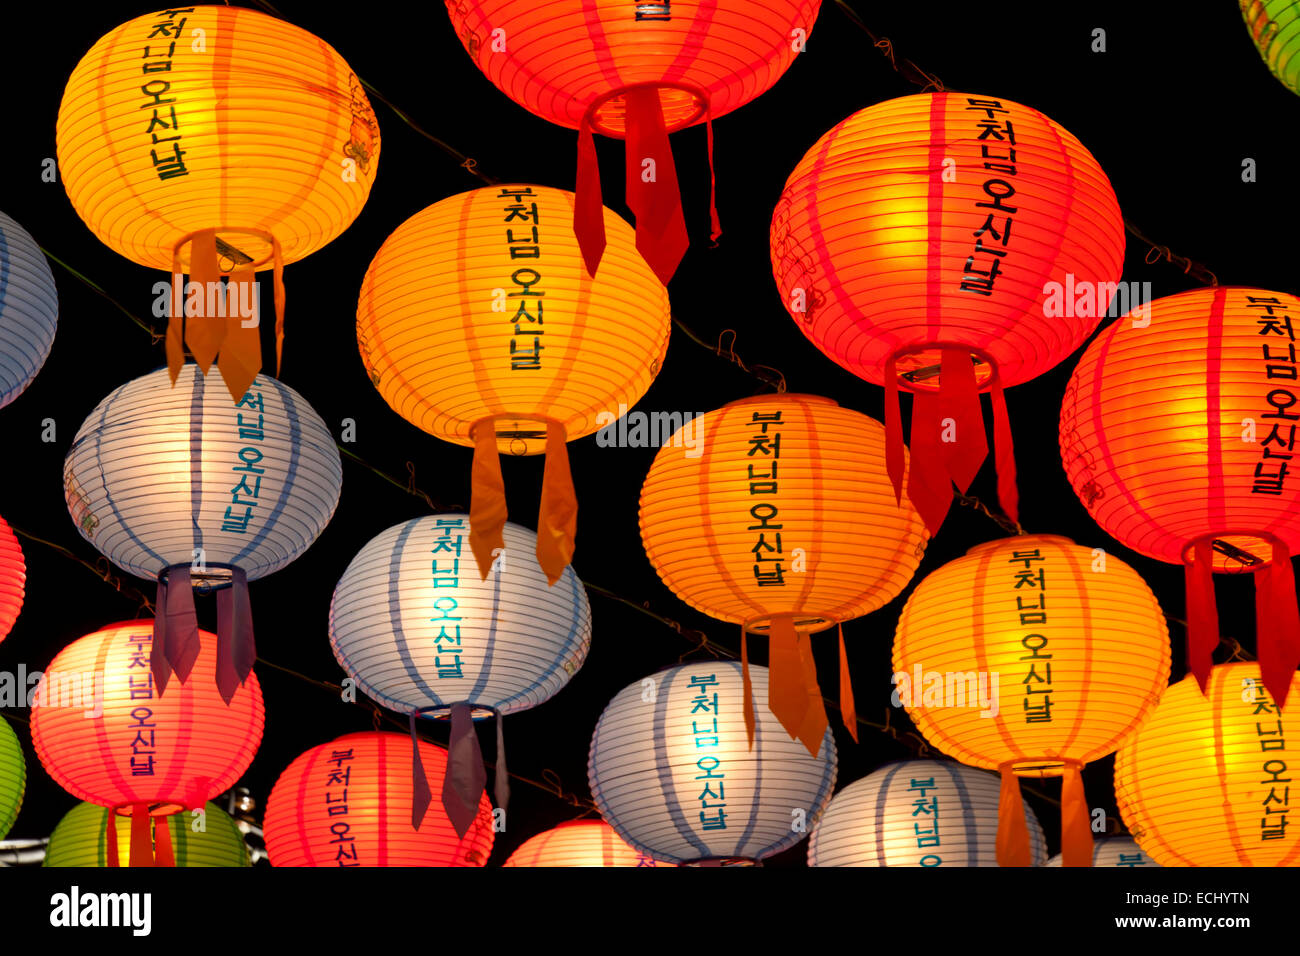 Hanging lanterns for celebrating Buddhas birthday The text on lantern means ' Buddhas birthday' Stock Photo